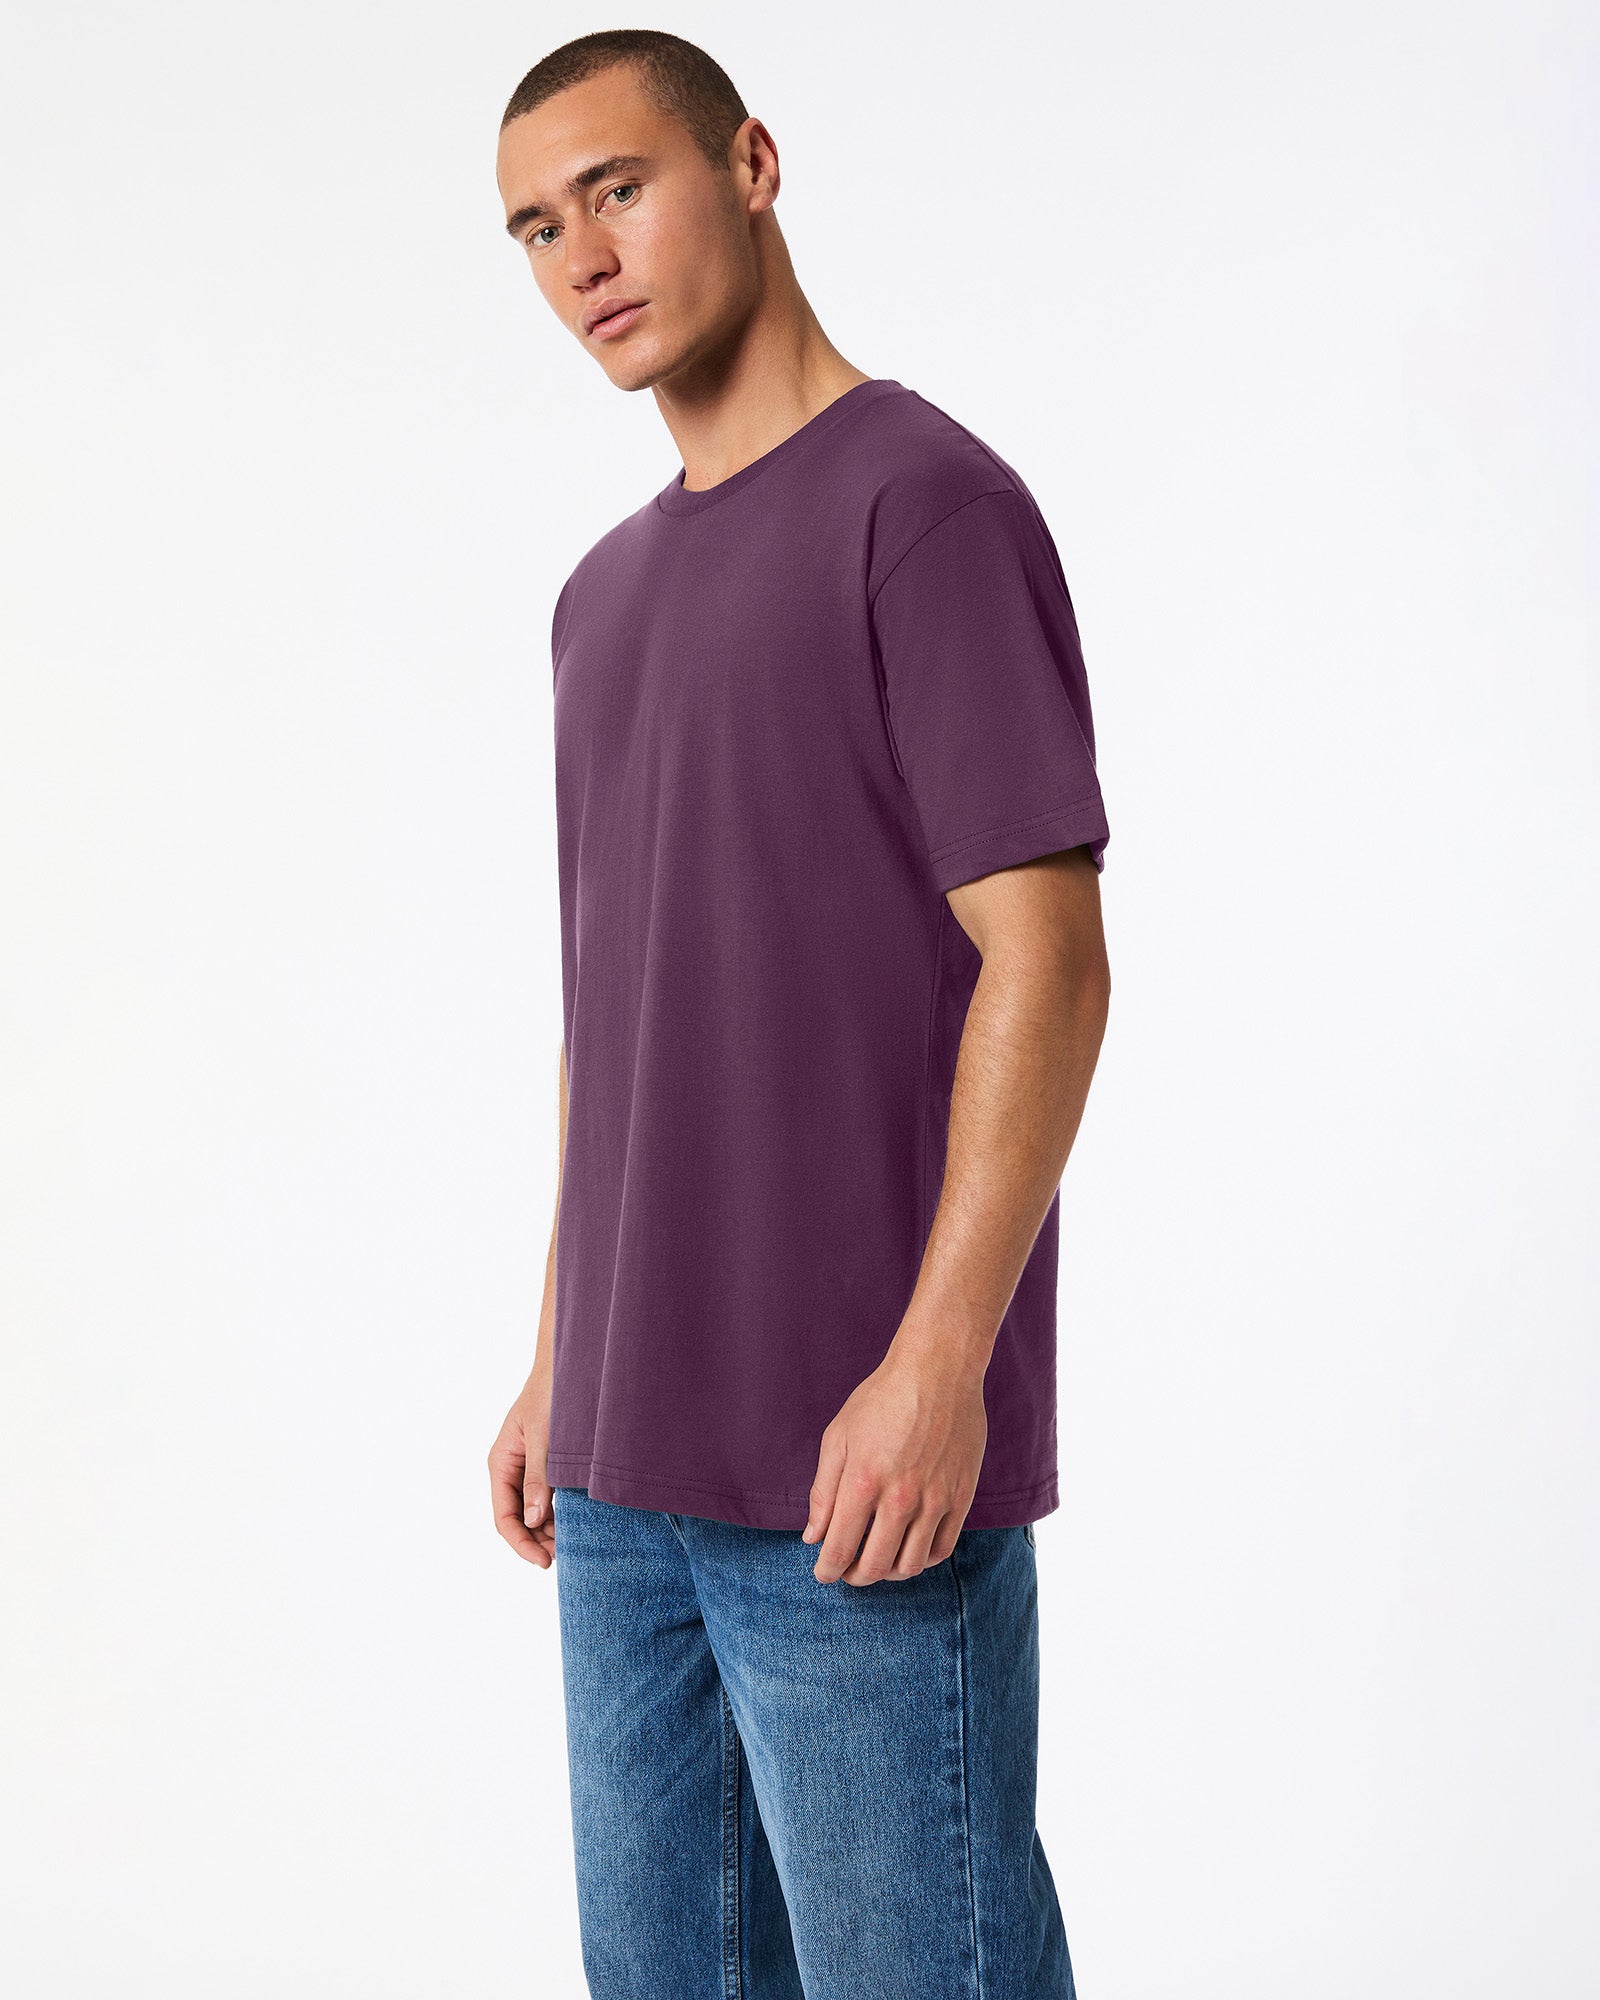 Fine Jersey Unisex Short Sleeve T-Shirt - Eggplant